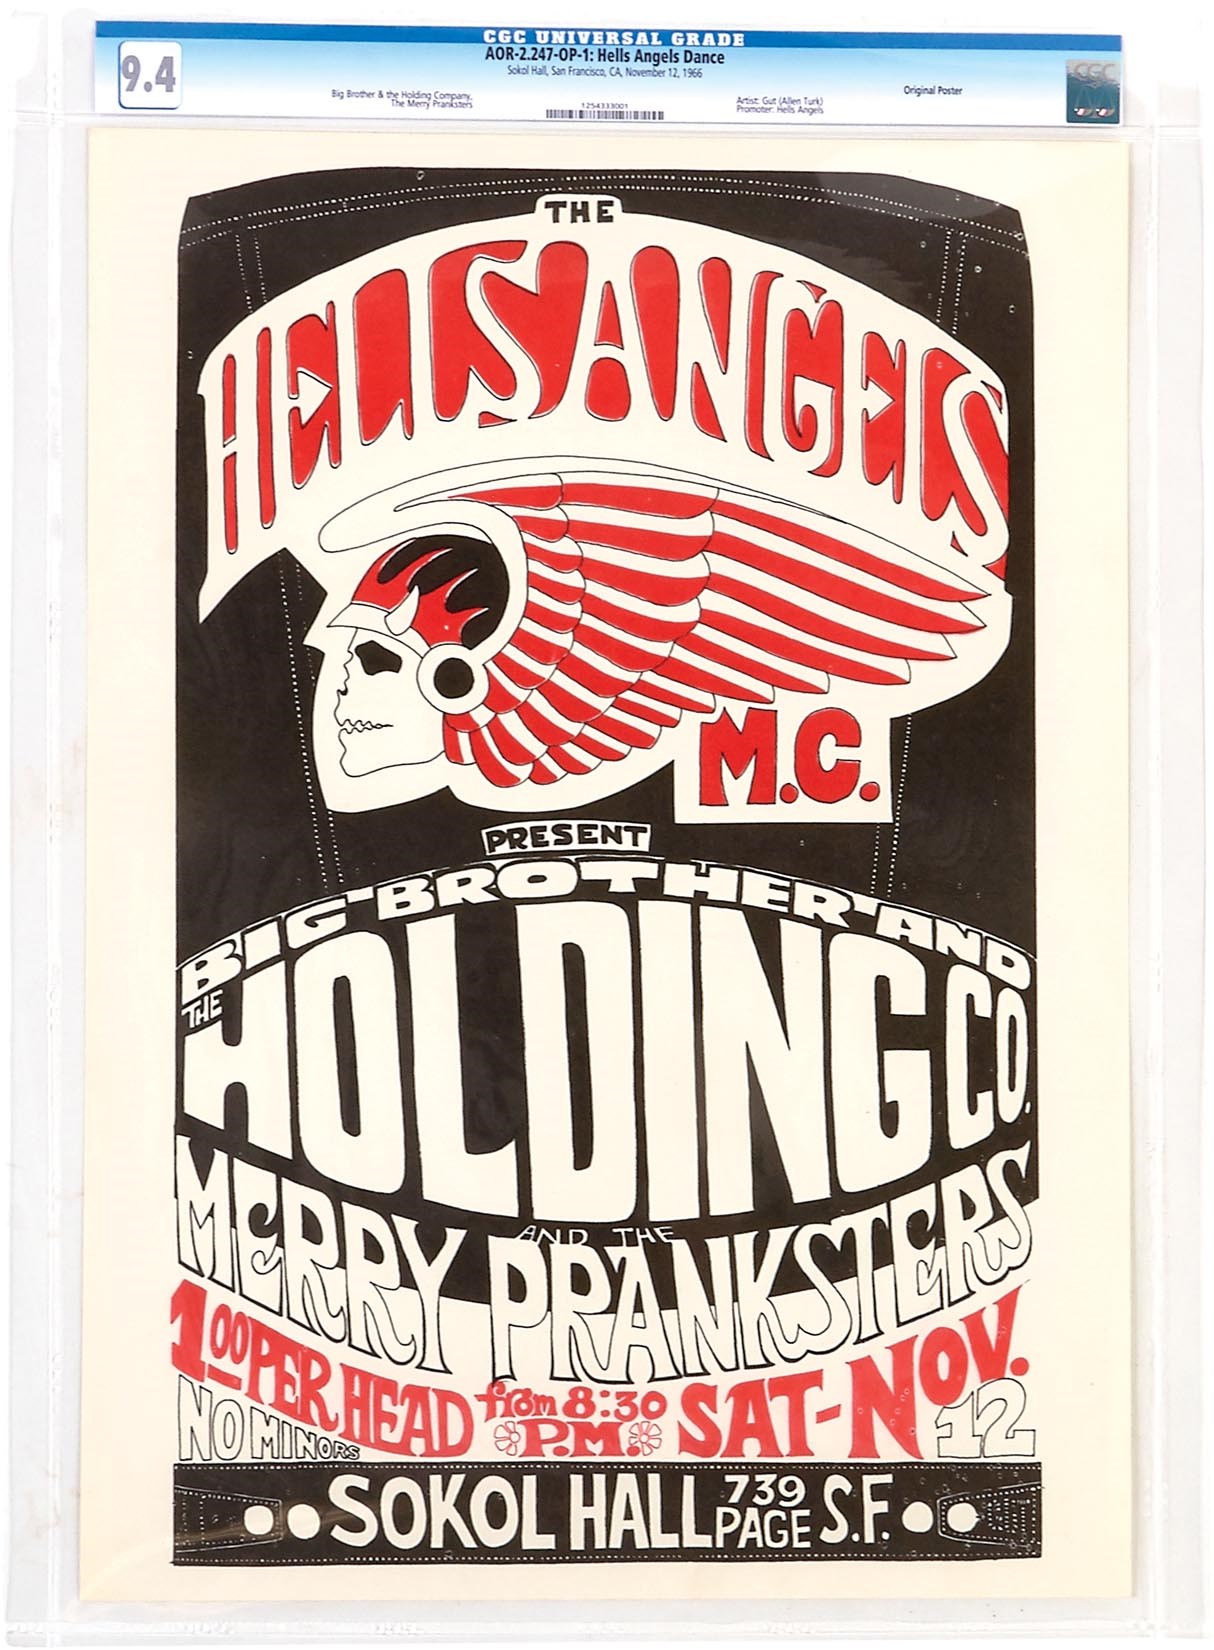 - First Printing 1966 Hells Angels Poster by Gut w/Grateful Dead, Janis Joplin & Ken Kesey (CGC Graded 9.4 NM)